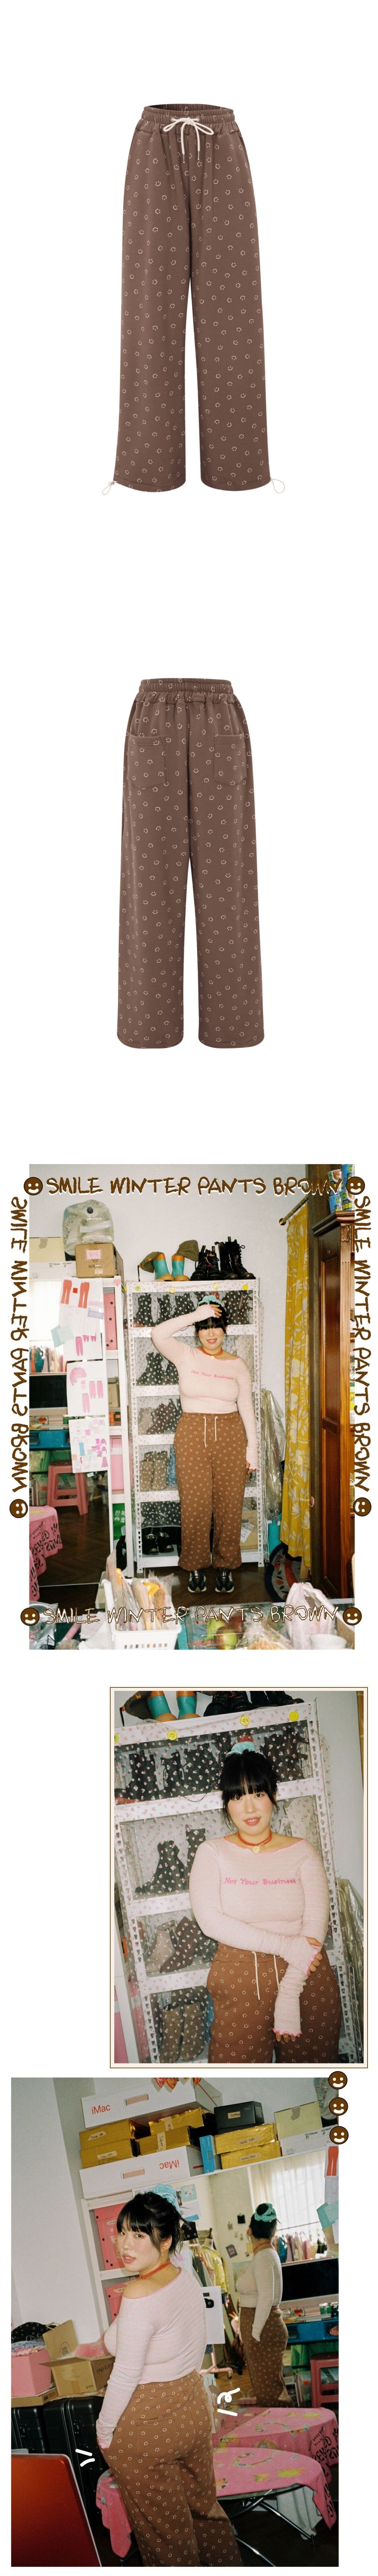 smile winter pants brown